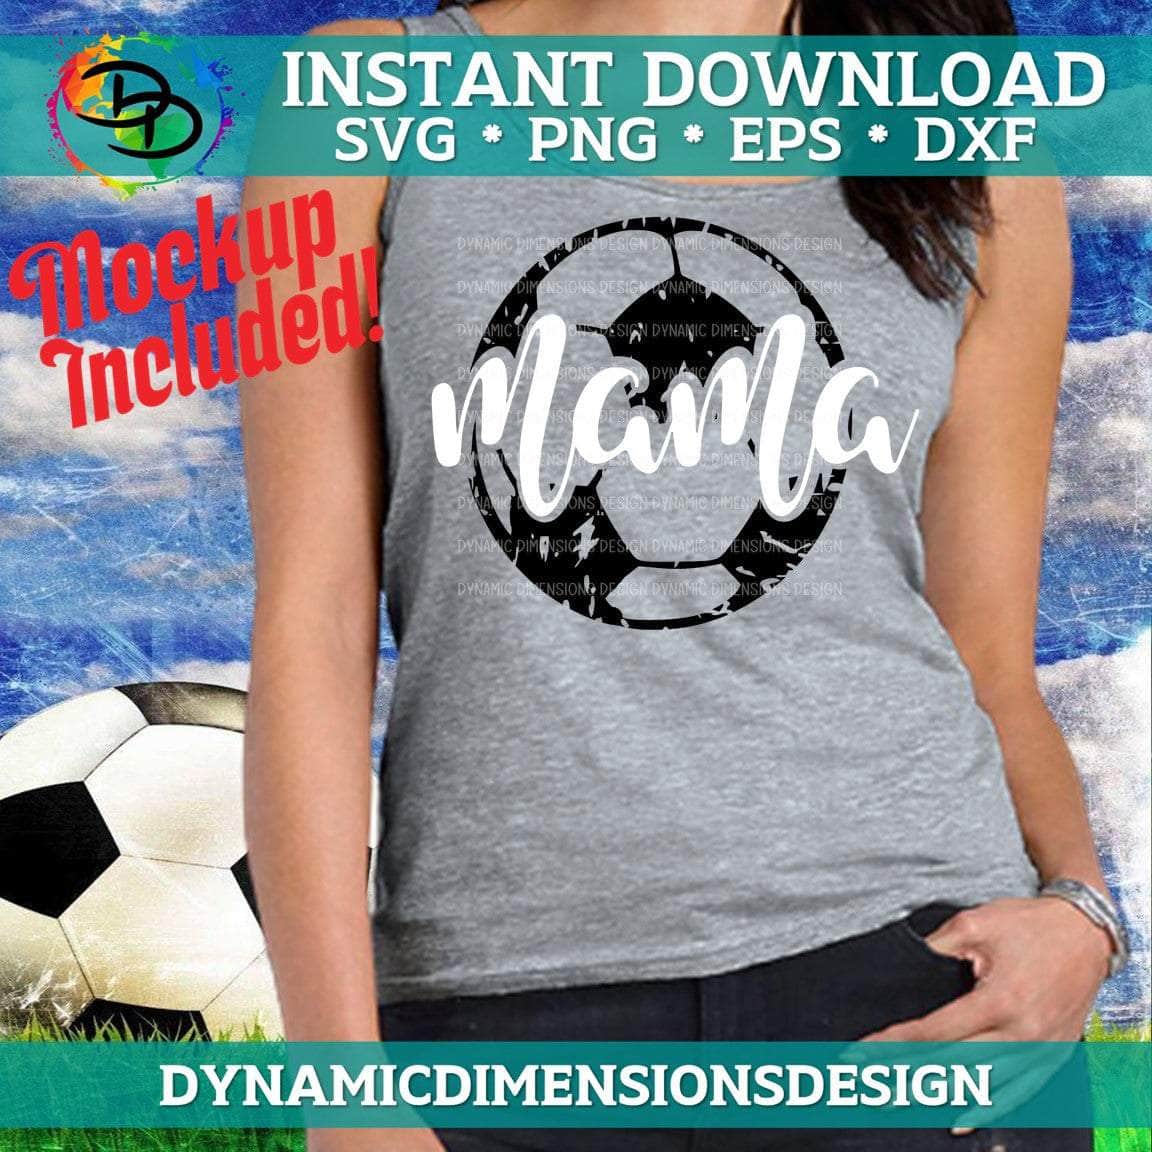 Soccer Mama